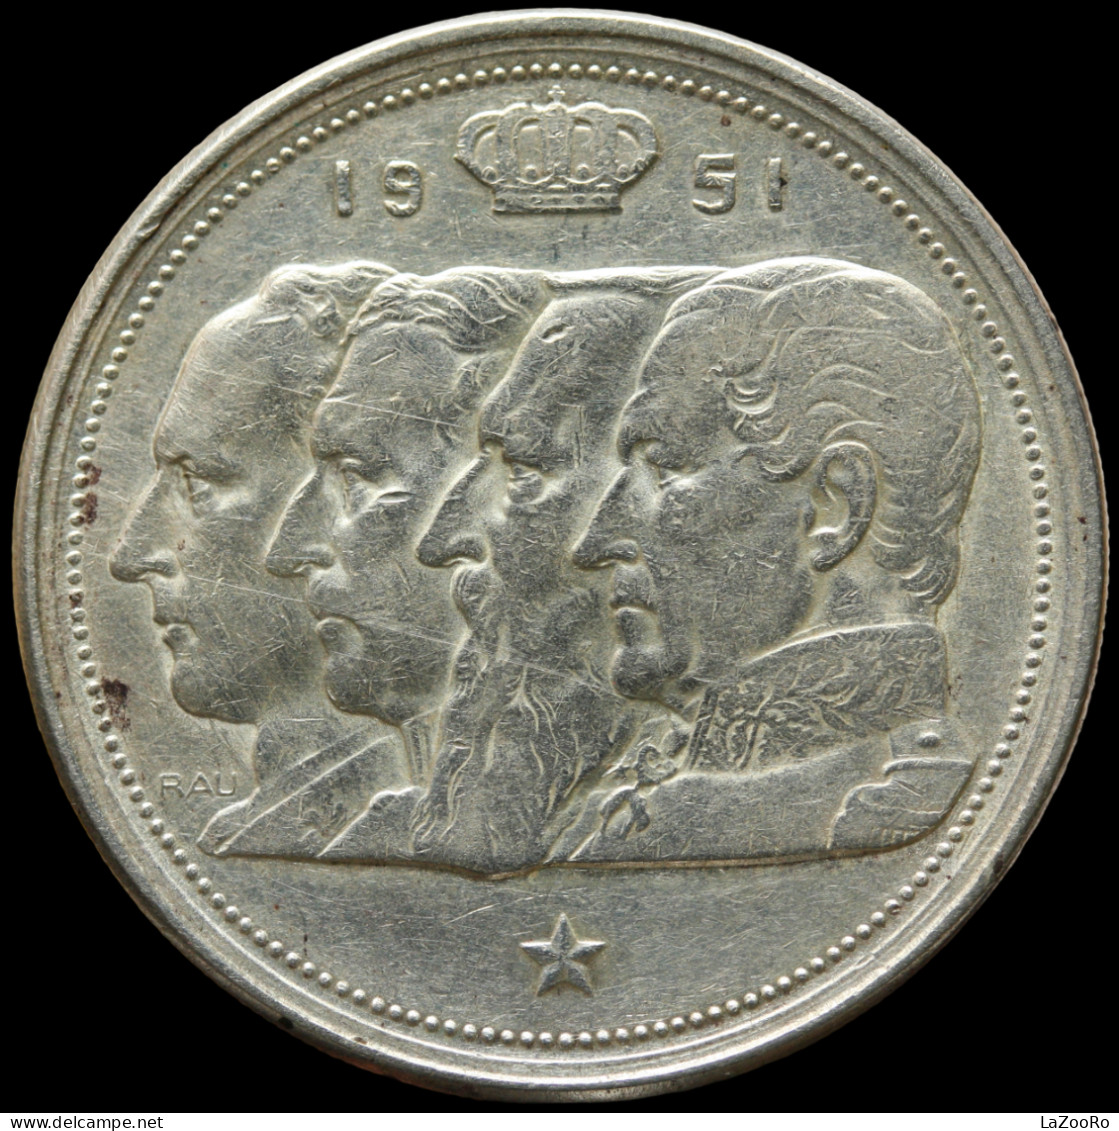 LaZooRo: Belgium 100 Francs Frank 1951 XF / UNC - Silver - 100 Franc